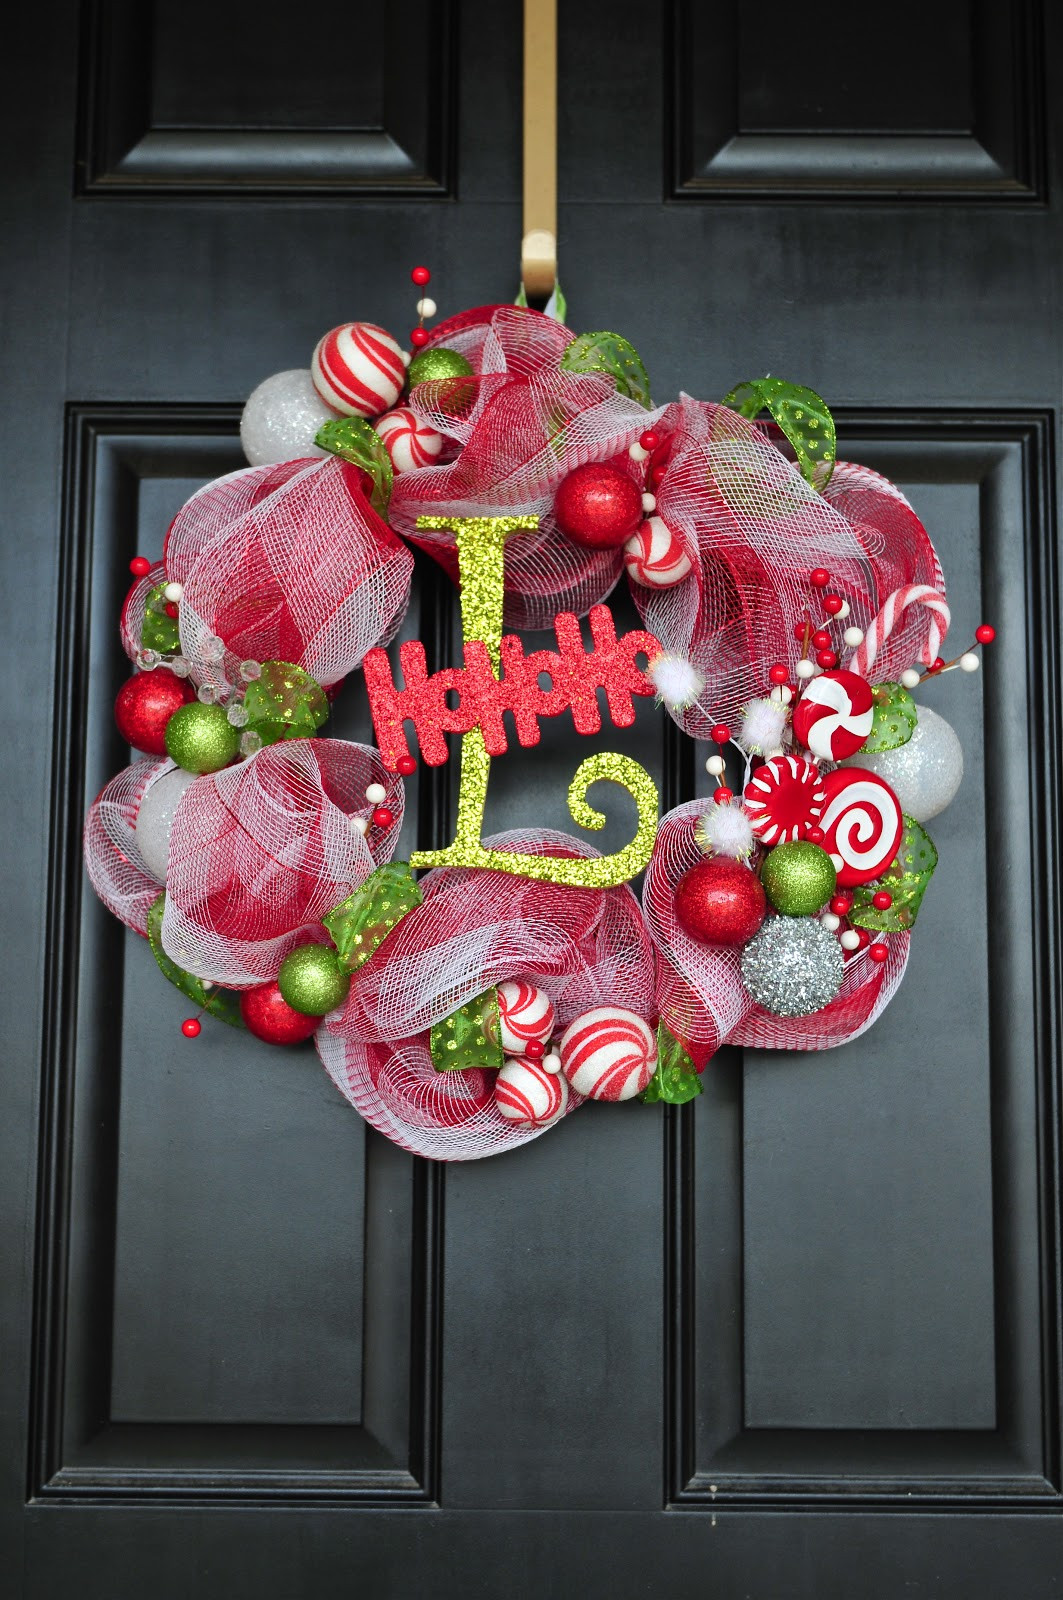 Best ideas about Easy Christmas DIY
. Save or Pin DIY Til We Die Easy Christmas mesh wreaths Now.